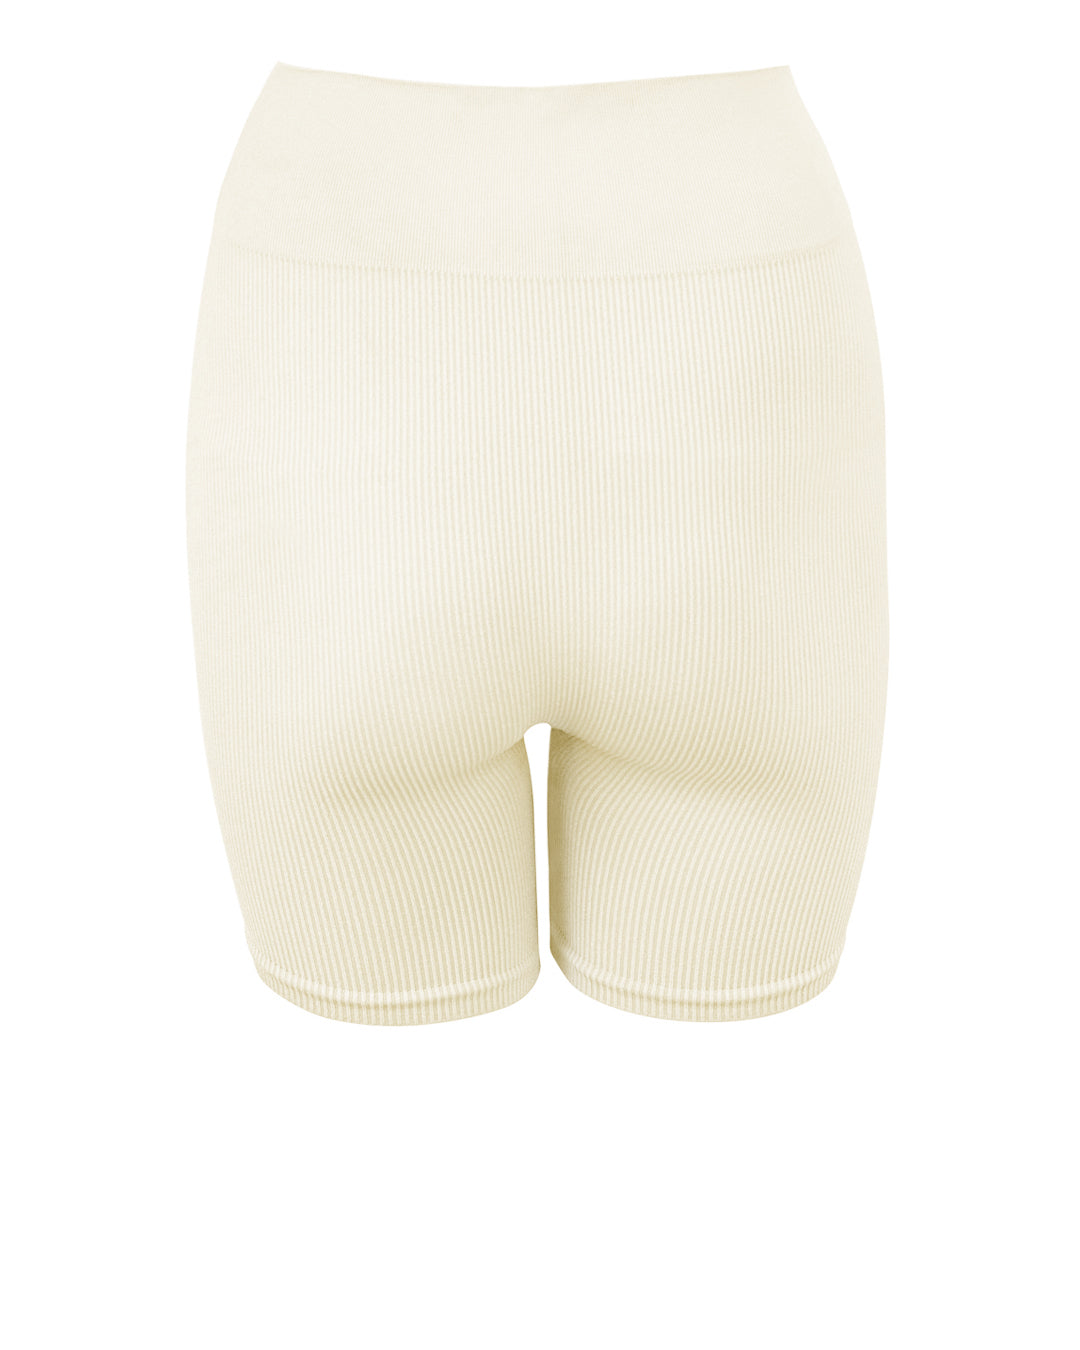 RIBBED COMPOSED Shorts | Cream | Image 3